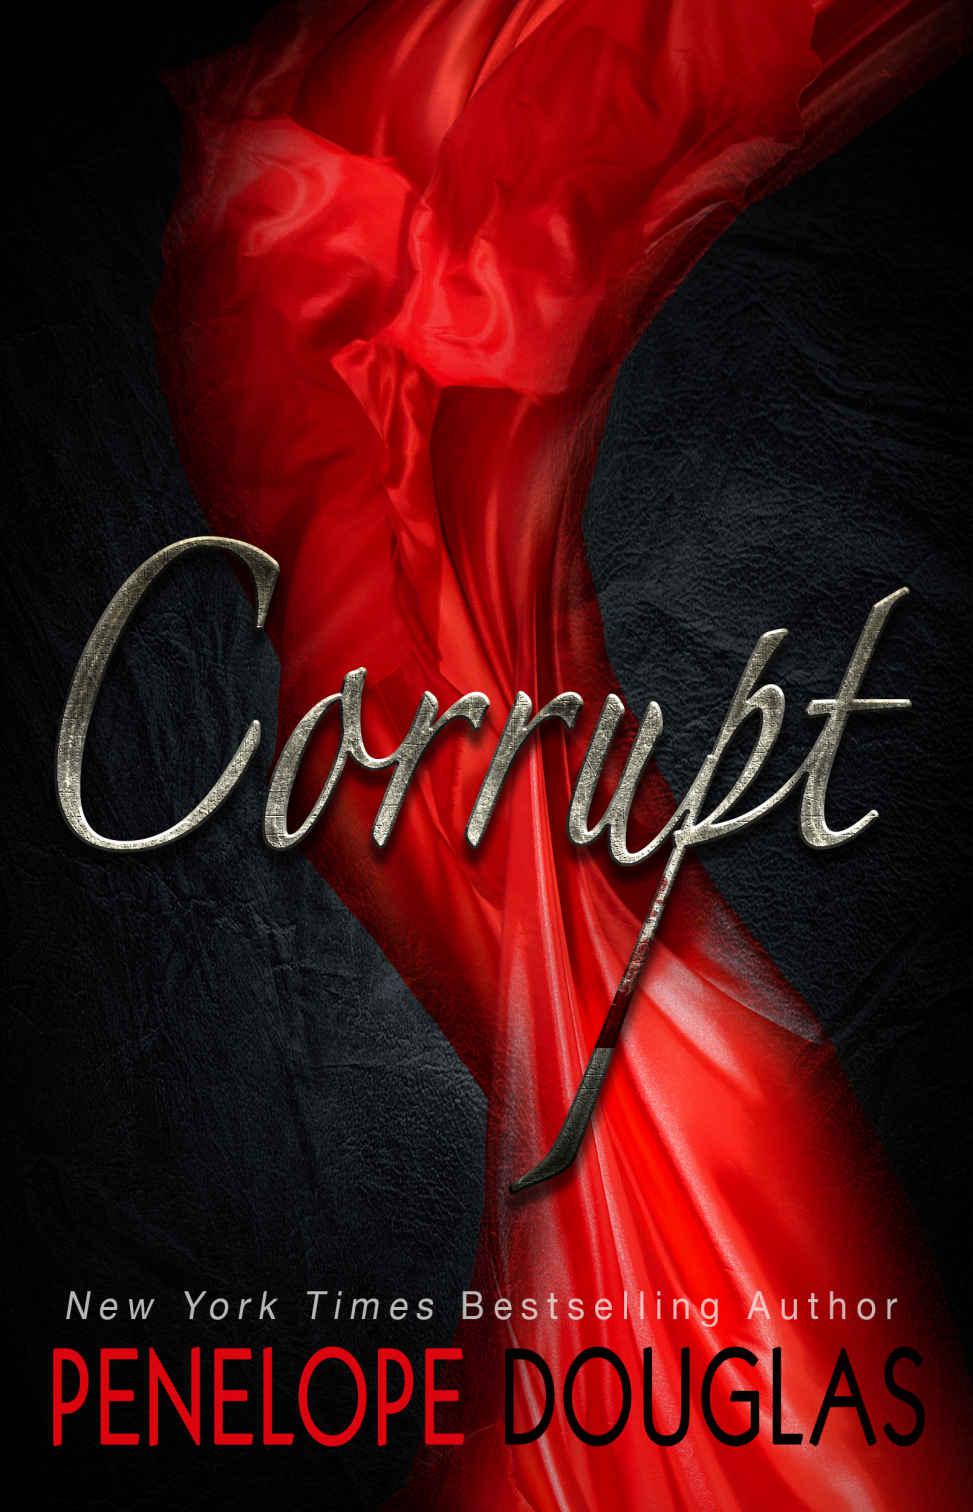 Corrupt by Penelope Douglas epub free